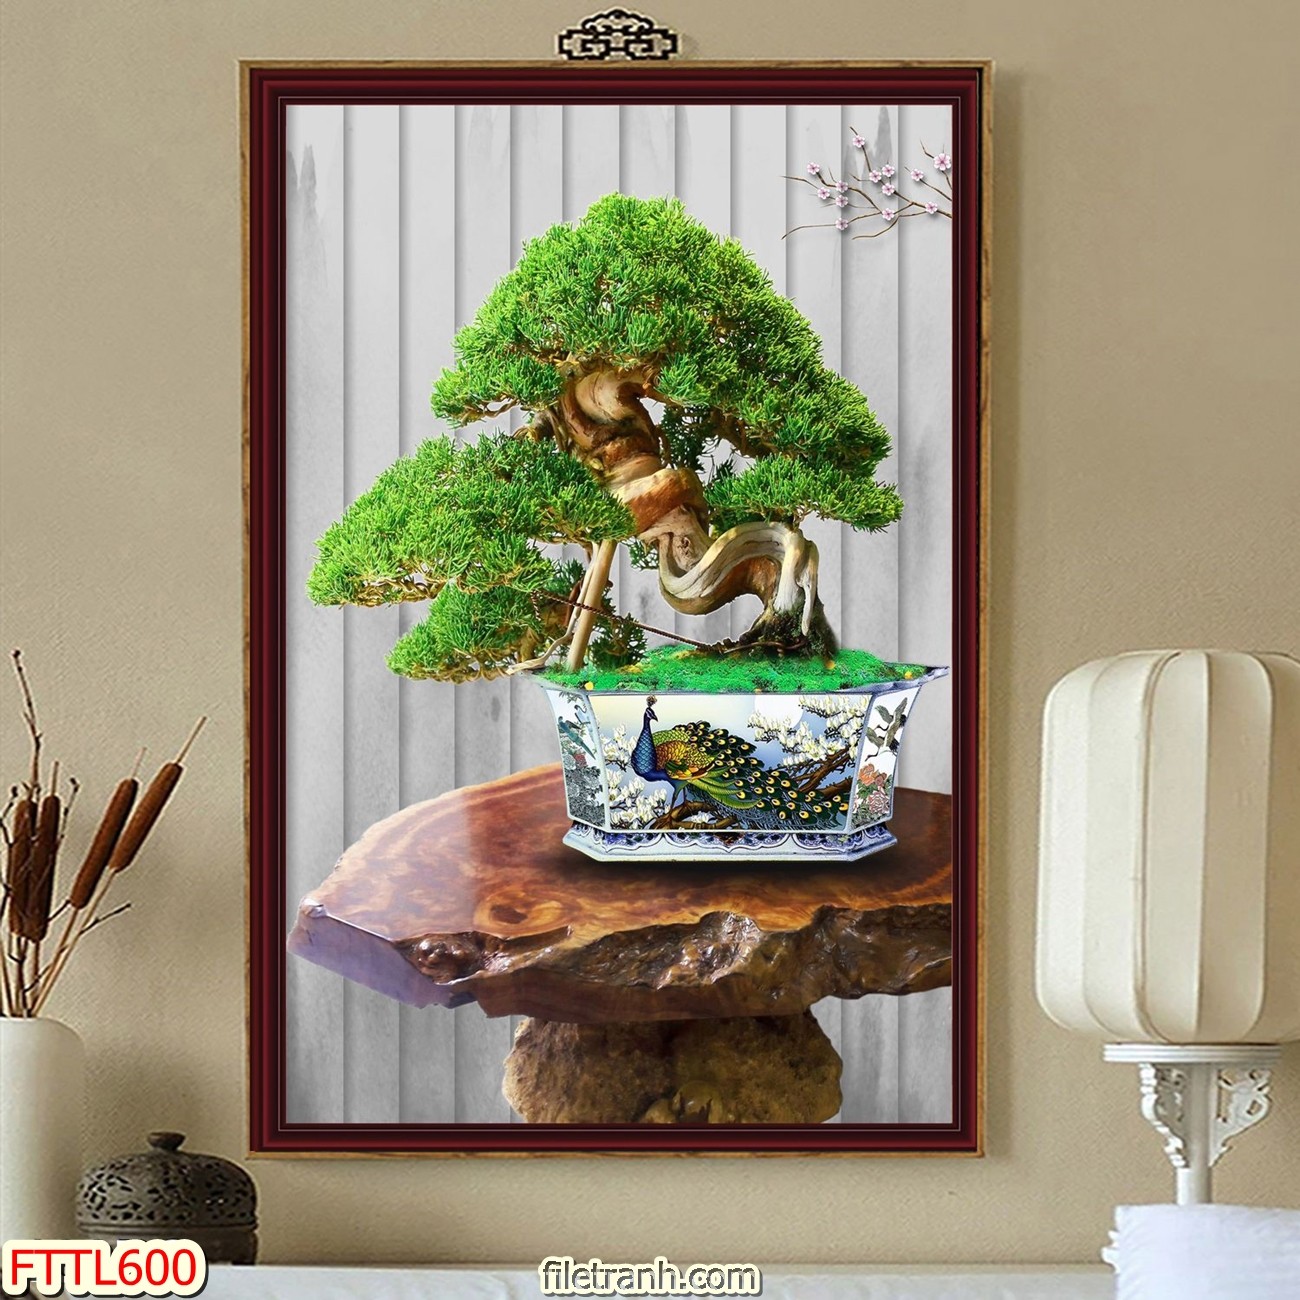 https://filetranh.com/file-tranh-chau-mai-bonsai/file-tranh-chau-mai-bonsai-fttl600.html